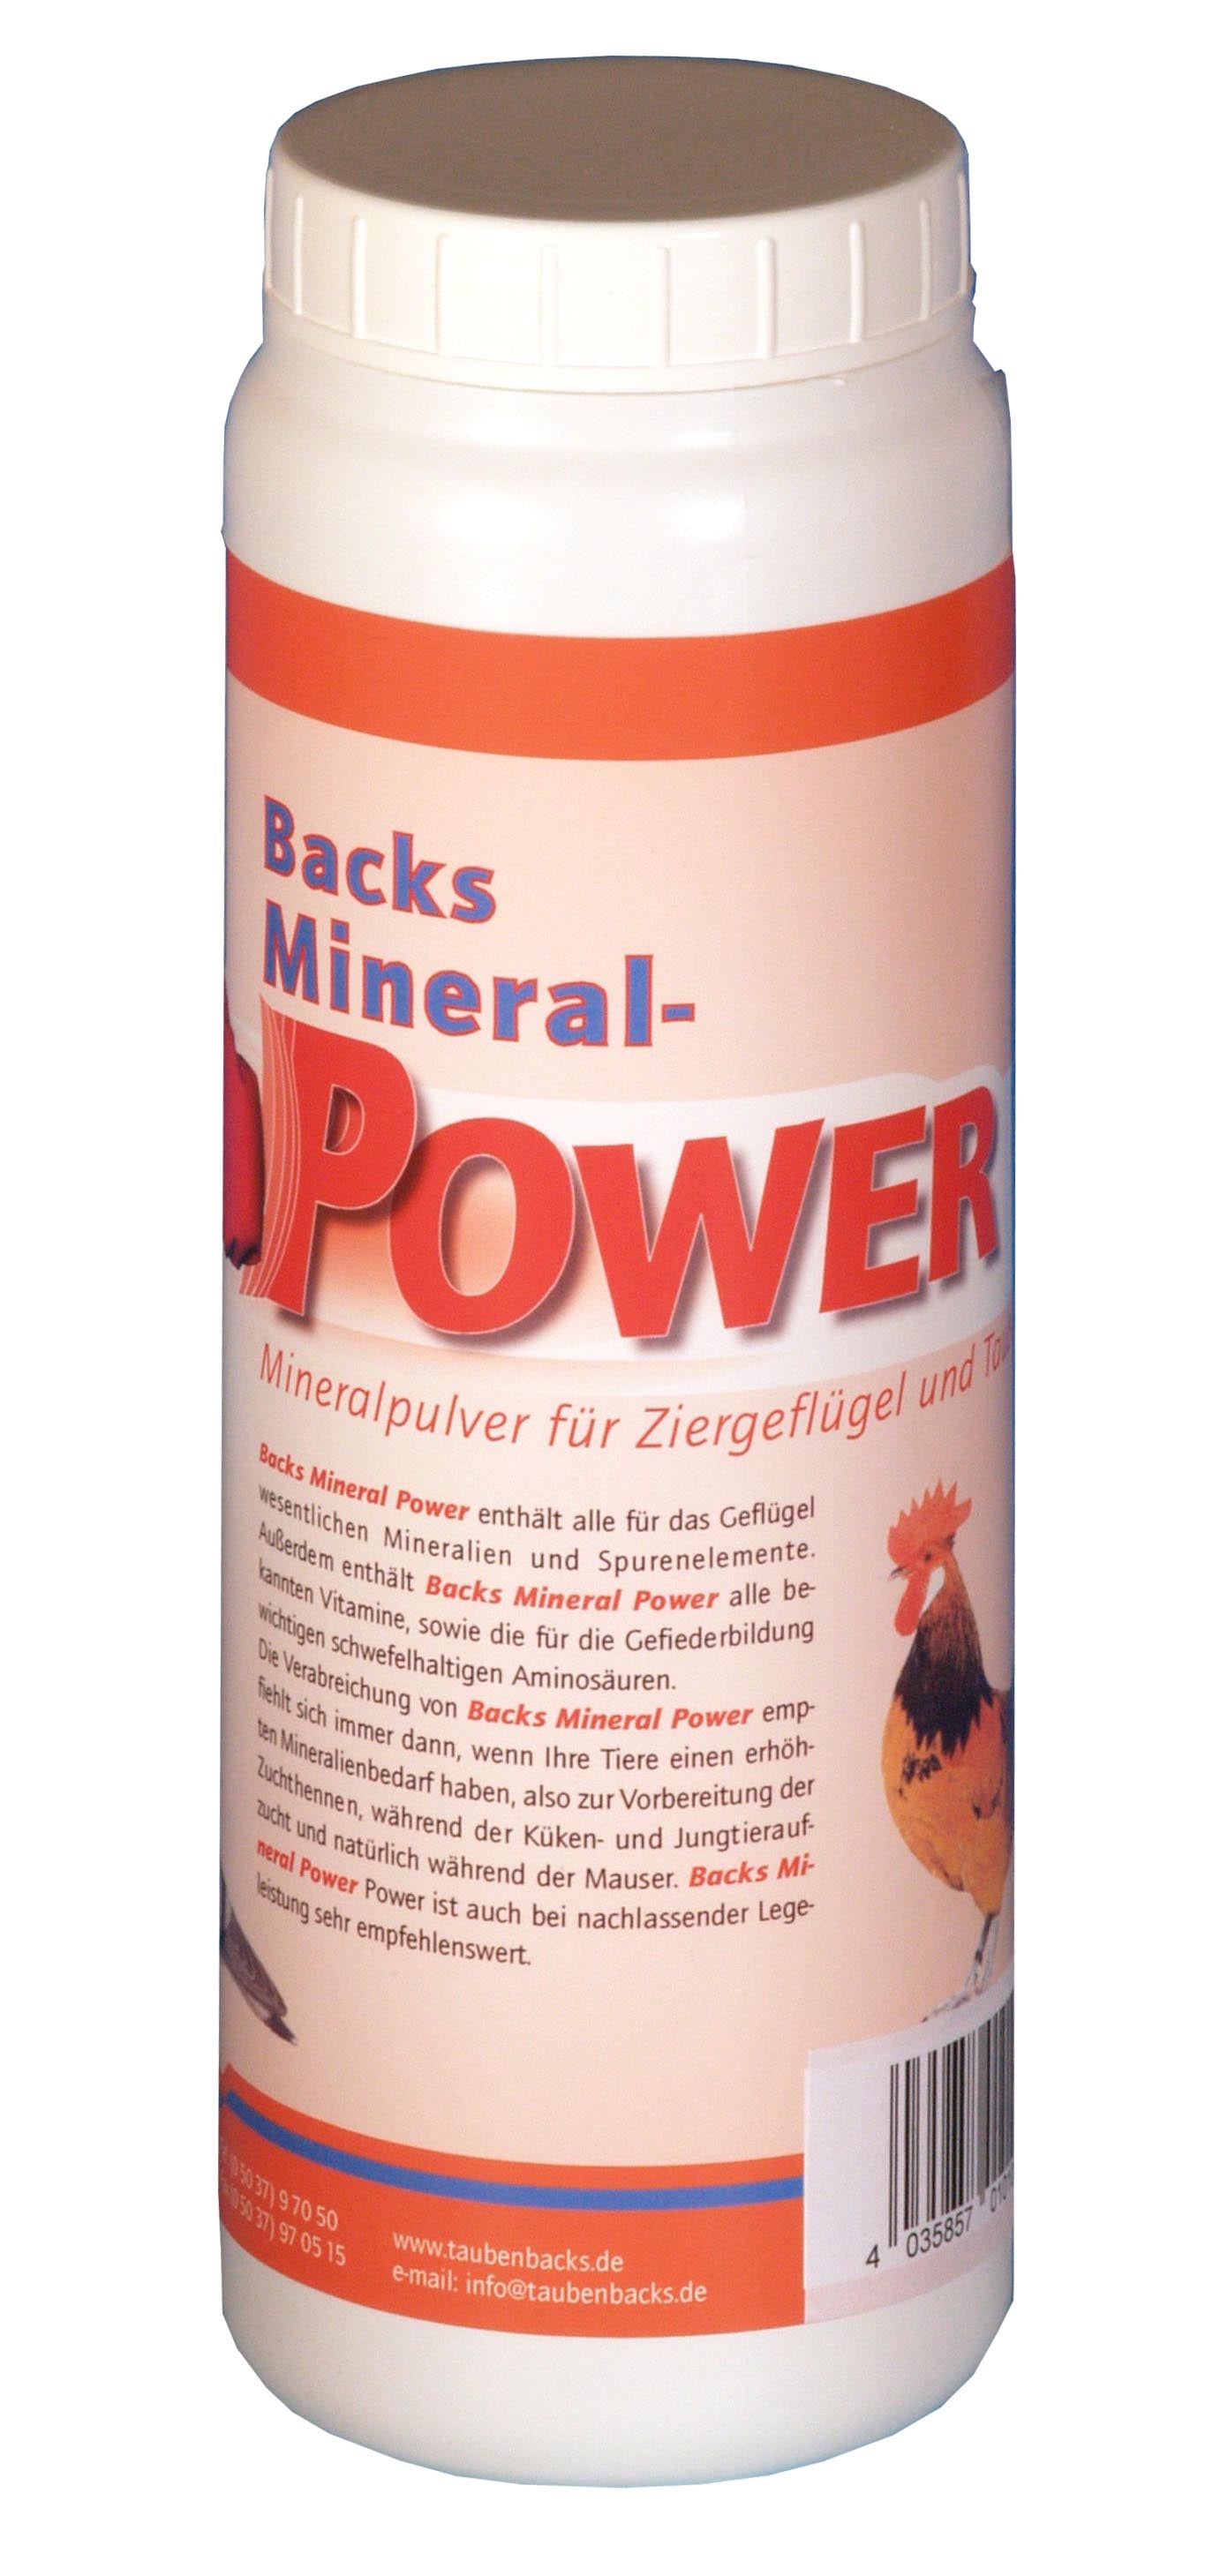 Backs Mineral-Power (1kg)